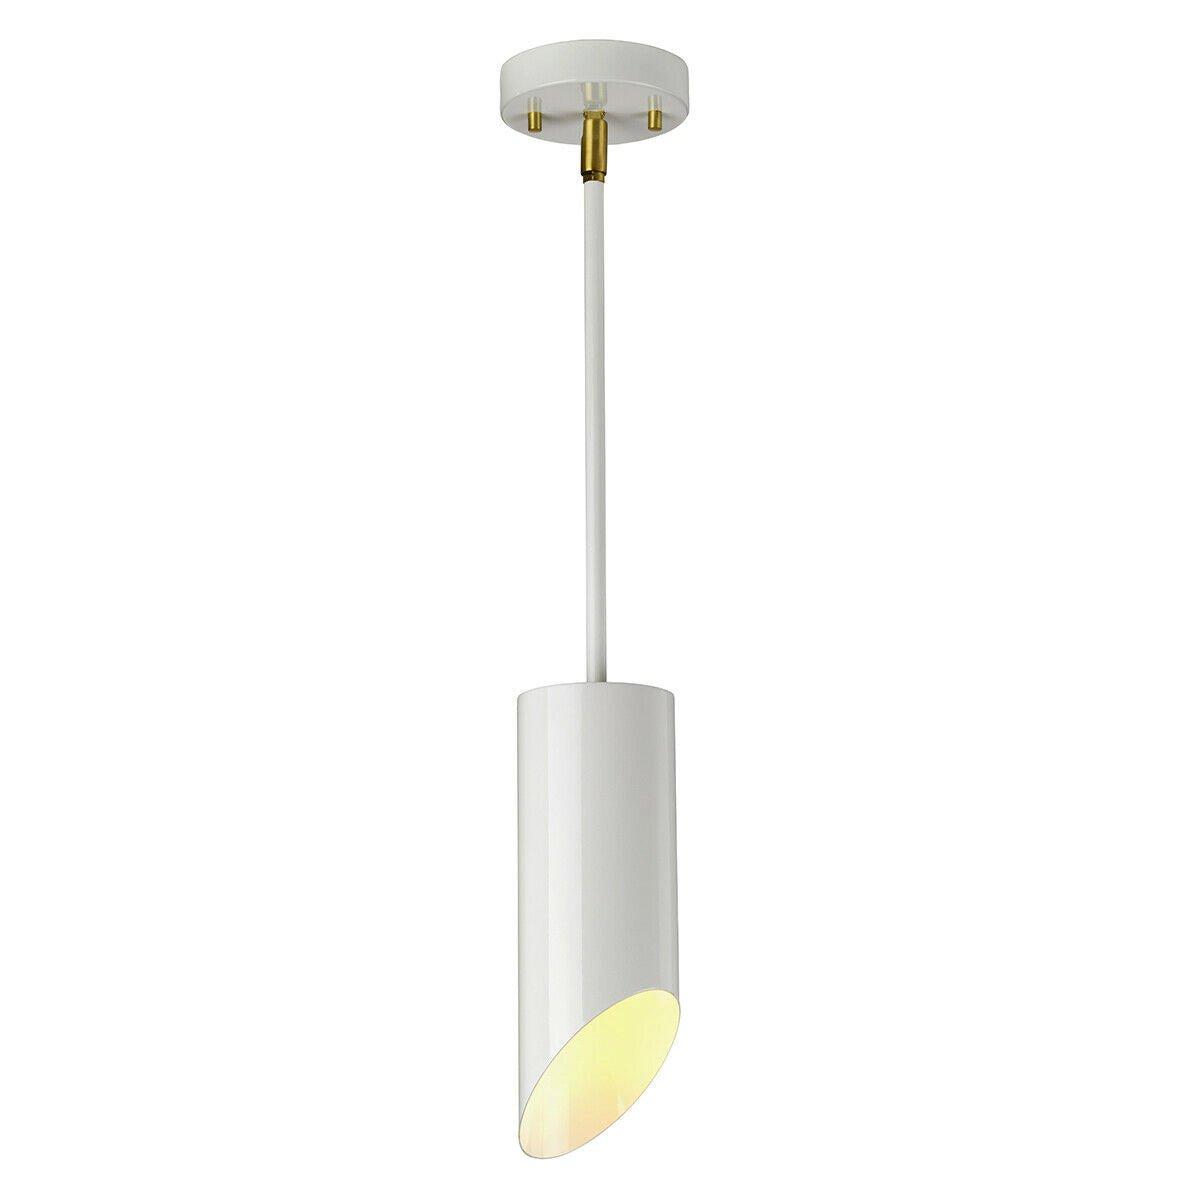 1 Bulb Ceiling Pendant Light Fitting White Aged Brass Finish LED E27 8W Bulb